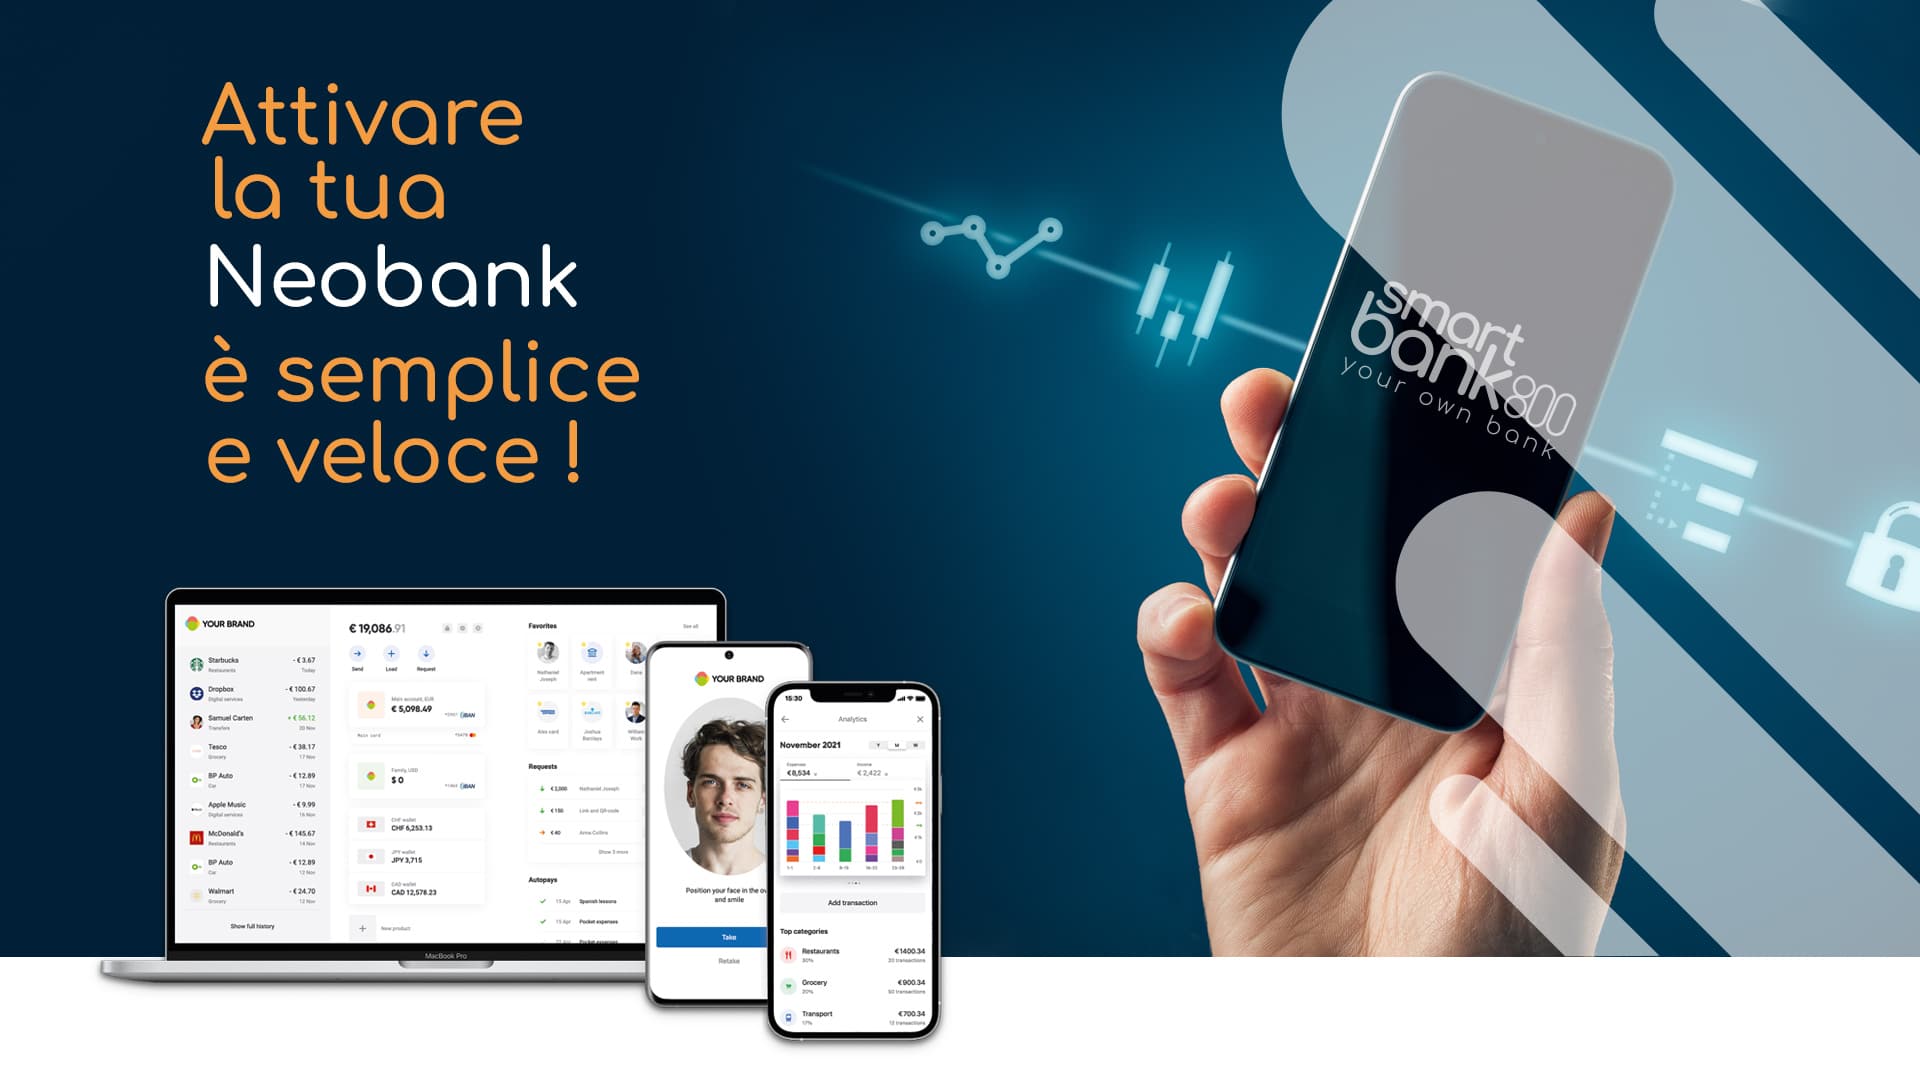 SmartBank800 - attivare Neobank